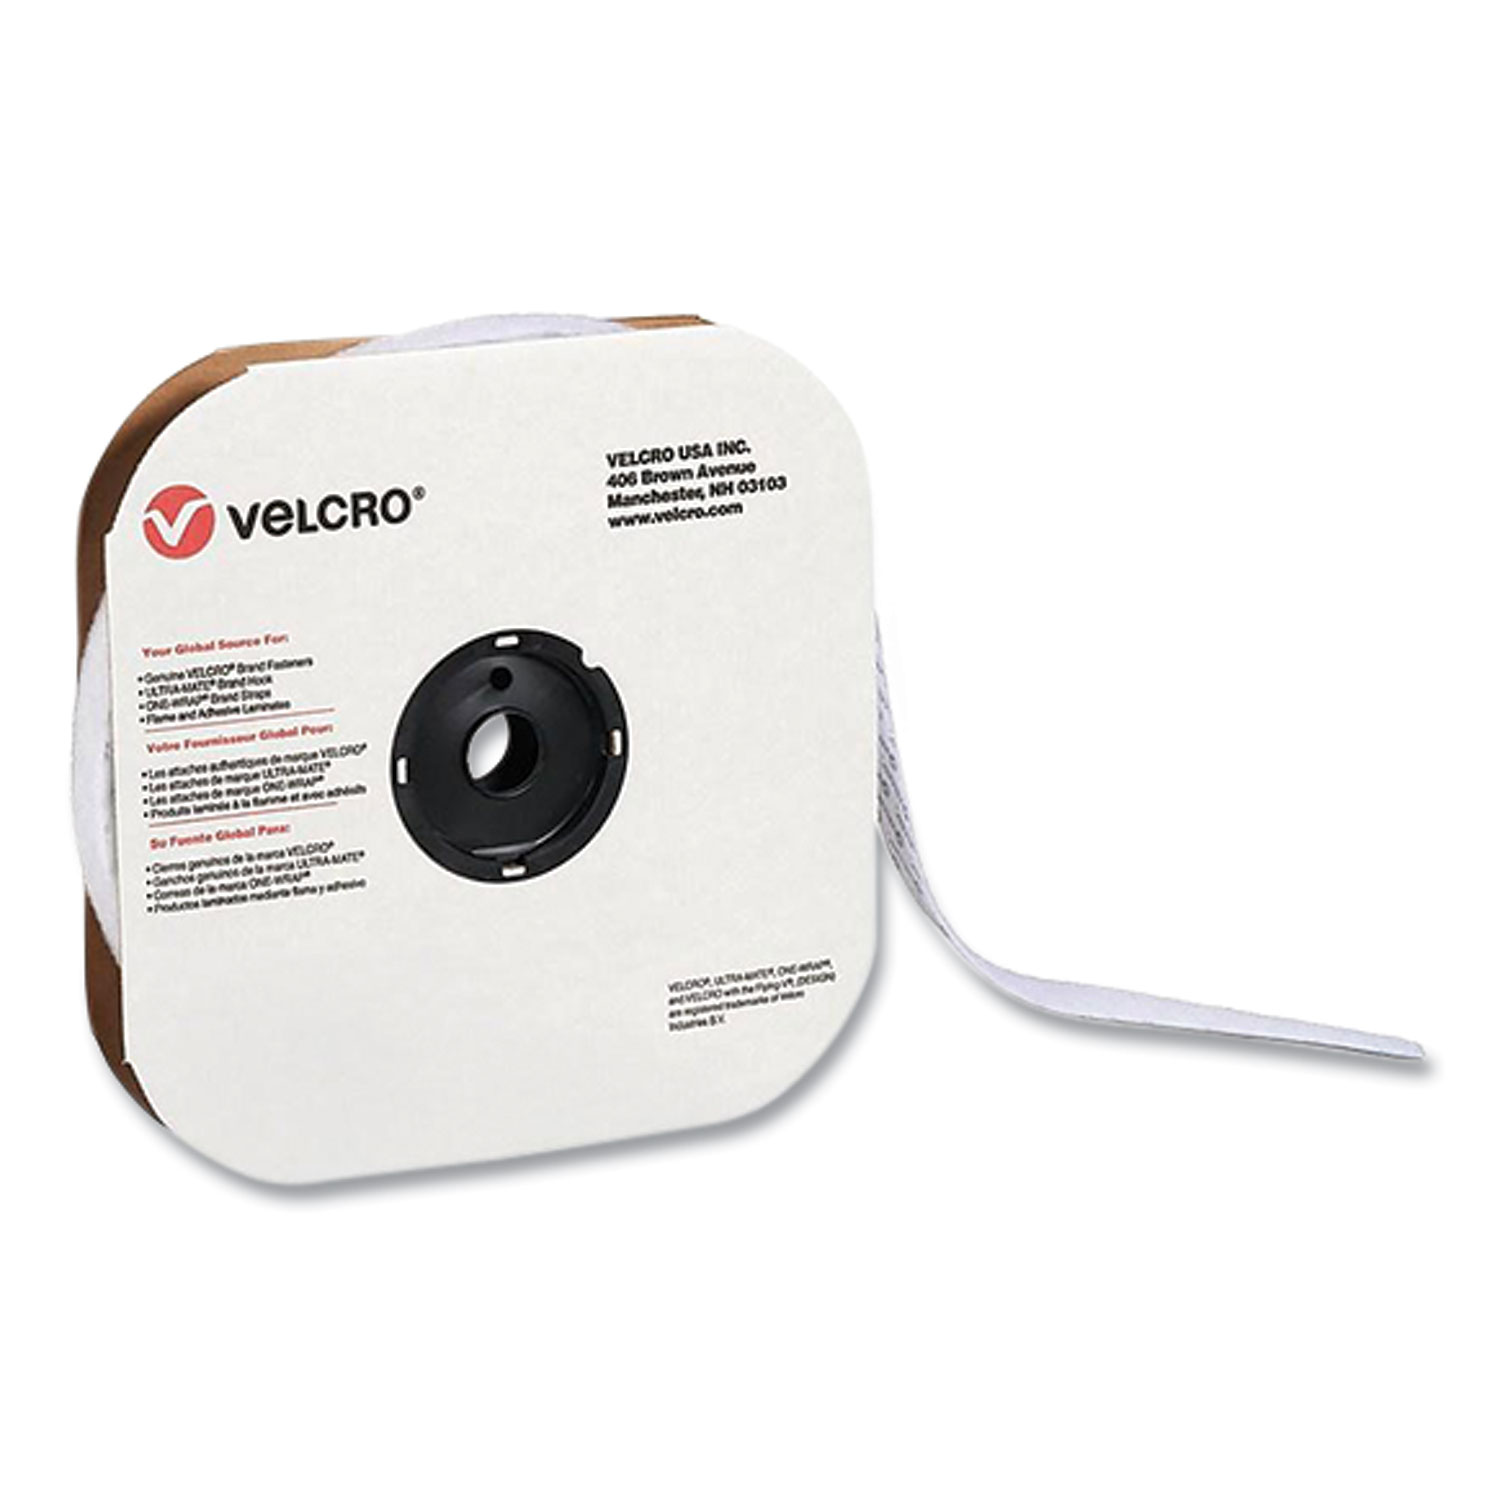 VELCRO(R) Brand Sticky Back Tape .75X5' - White - 6907709